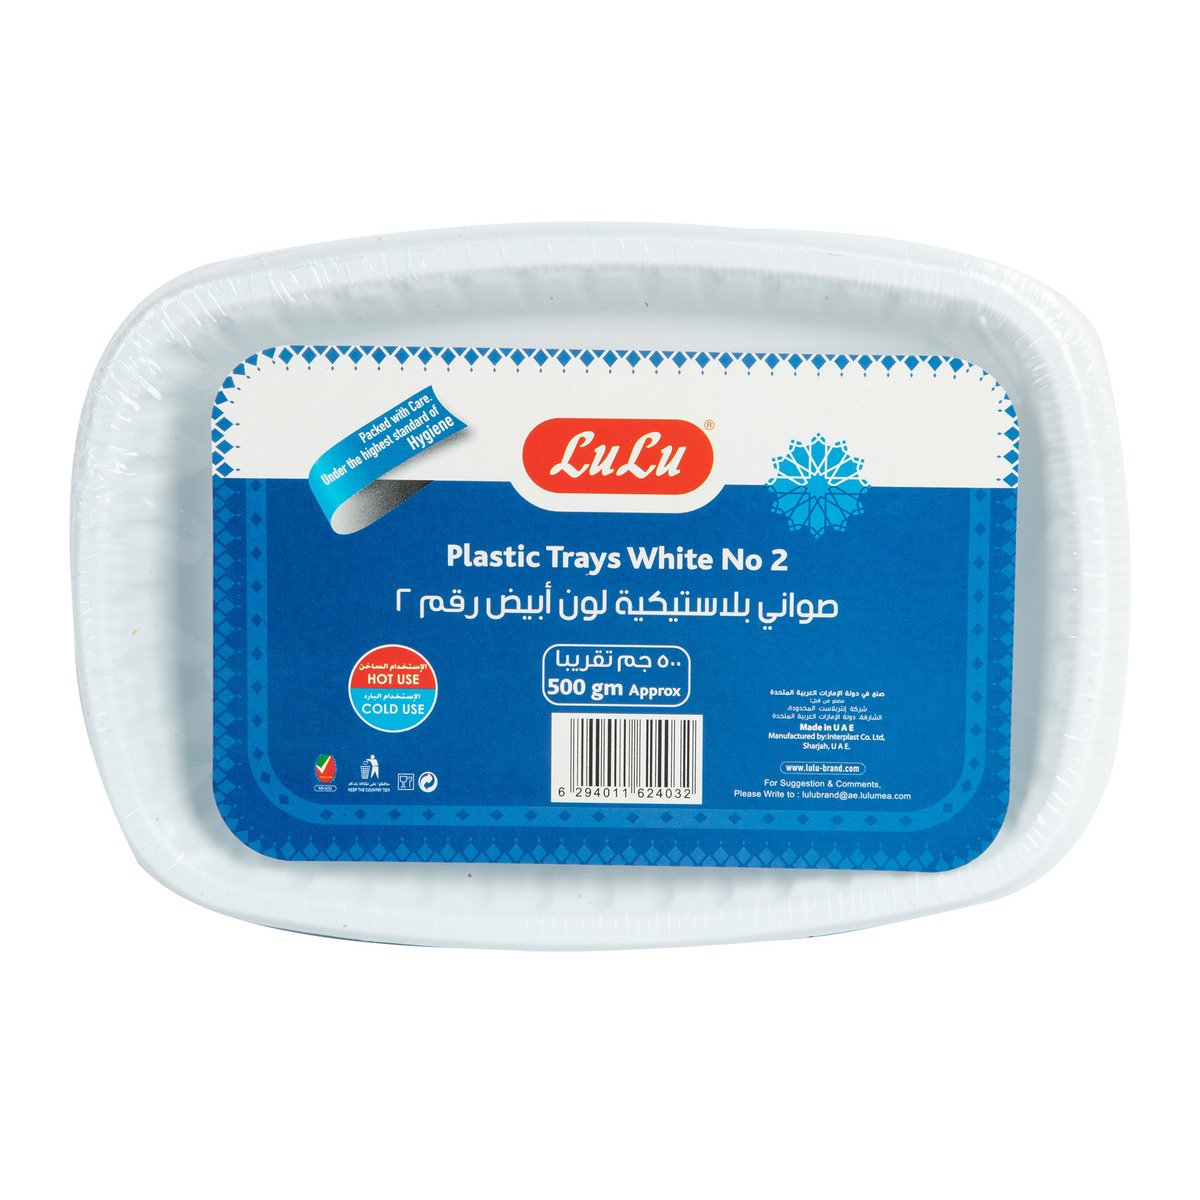 LuLu White Plastic Tray No.2 500g